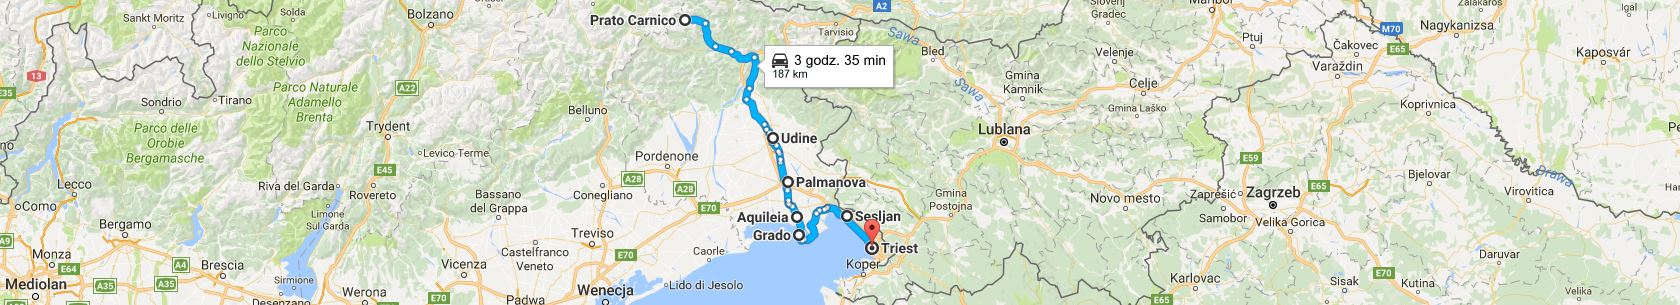 Trasa z Prato Carnico do Triestu